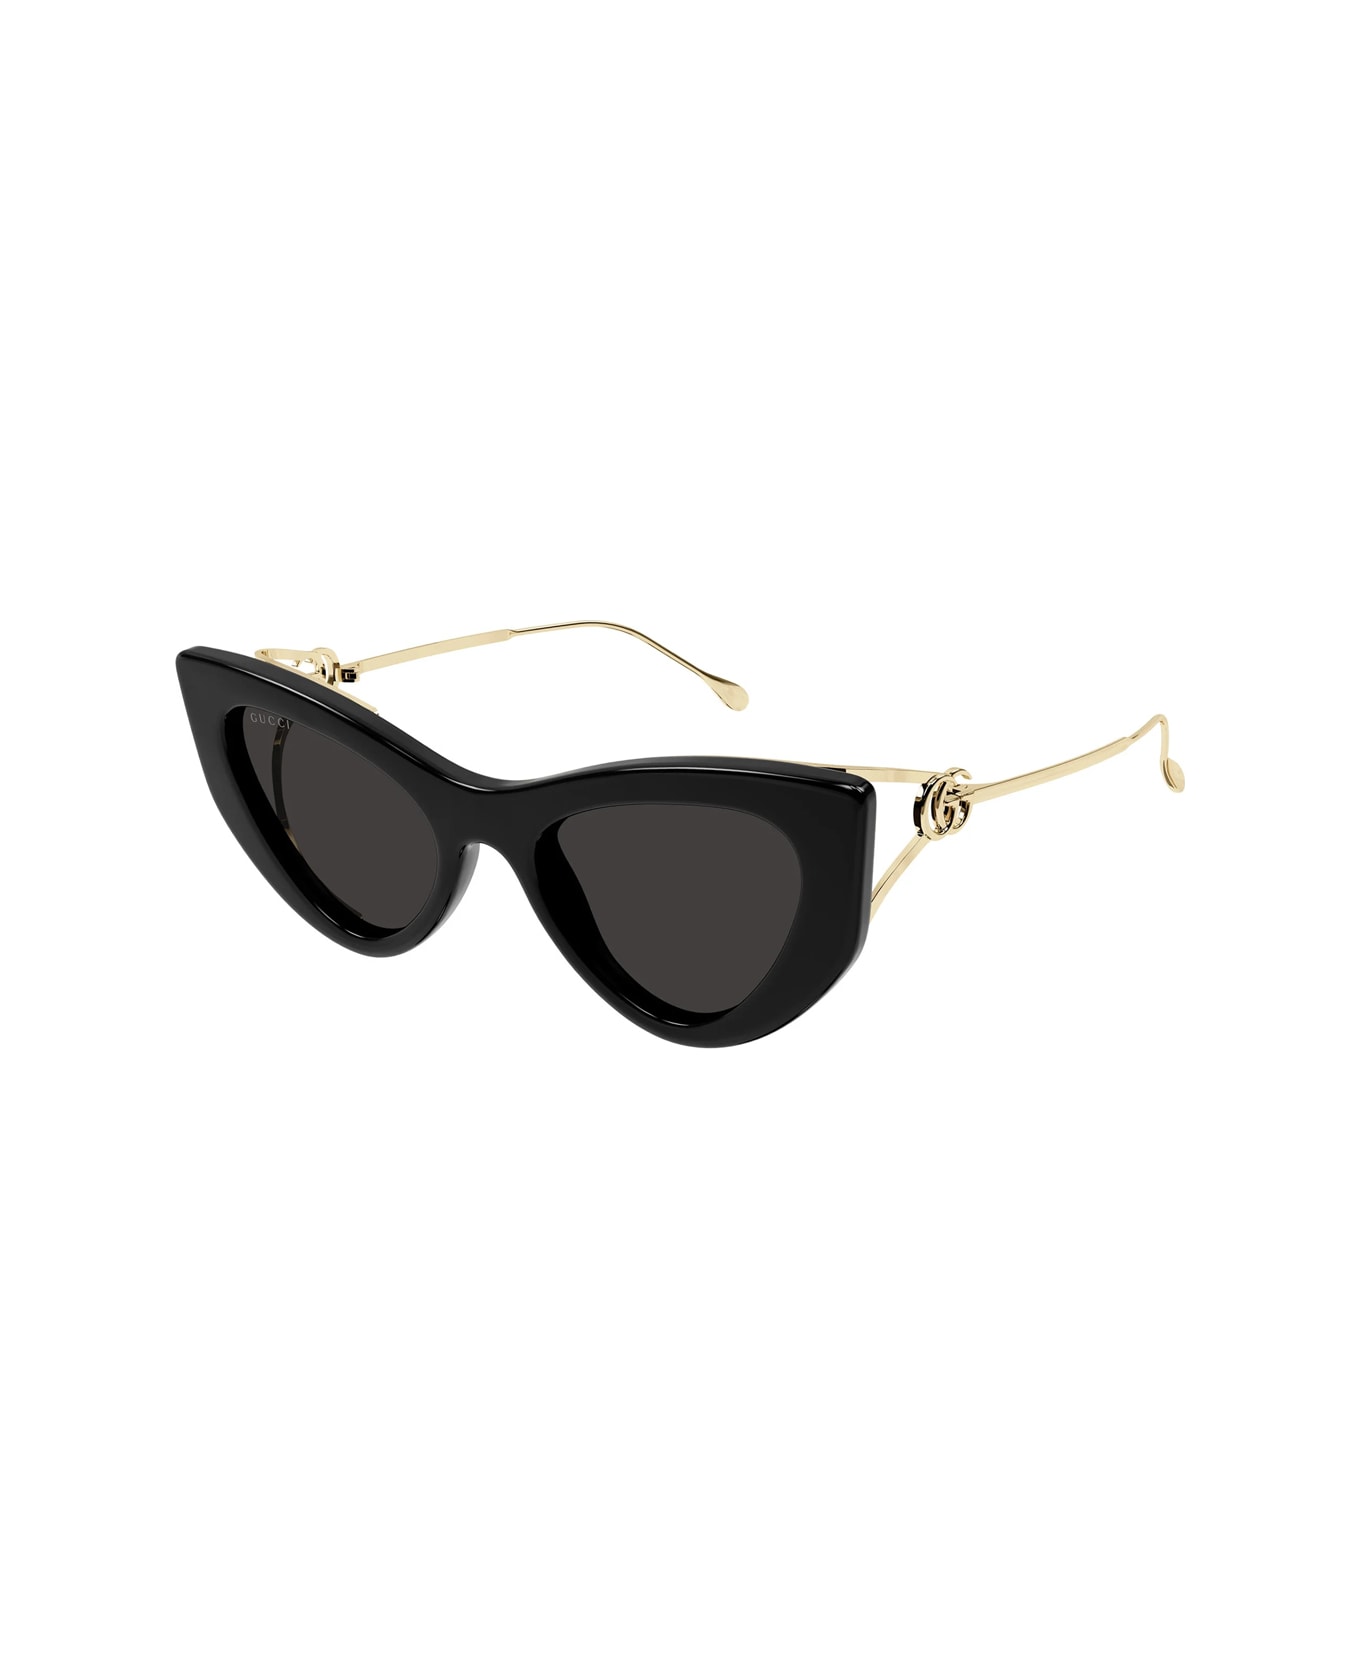 Gucci Eyewear Gg1565s Line Fork 001 Nero Sunglasses - Nero サングラス